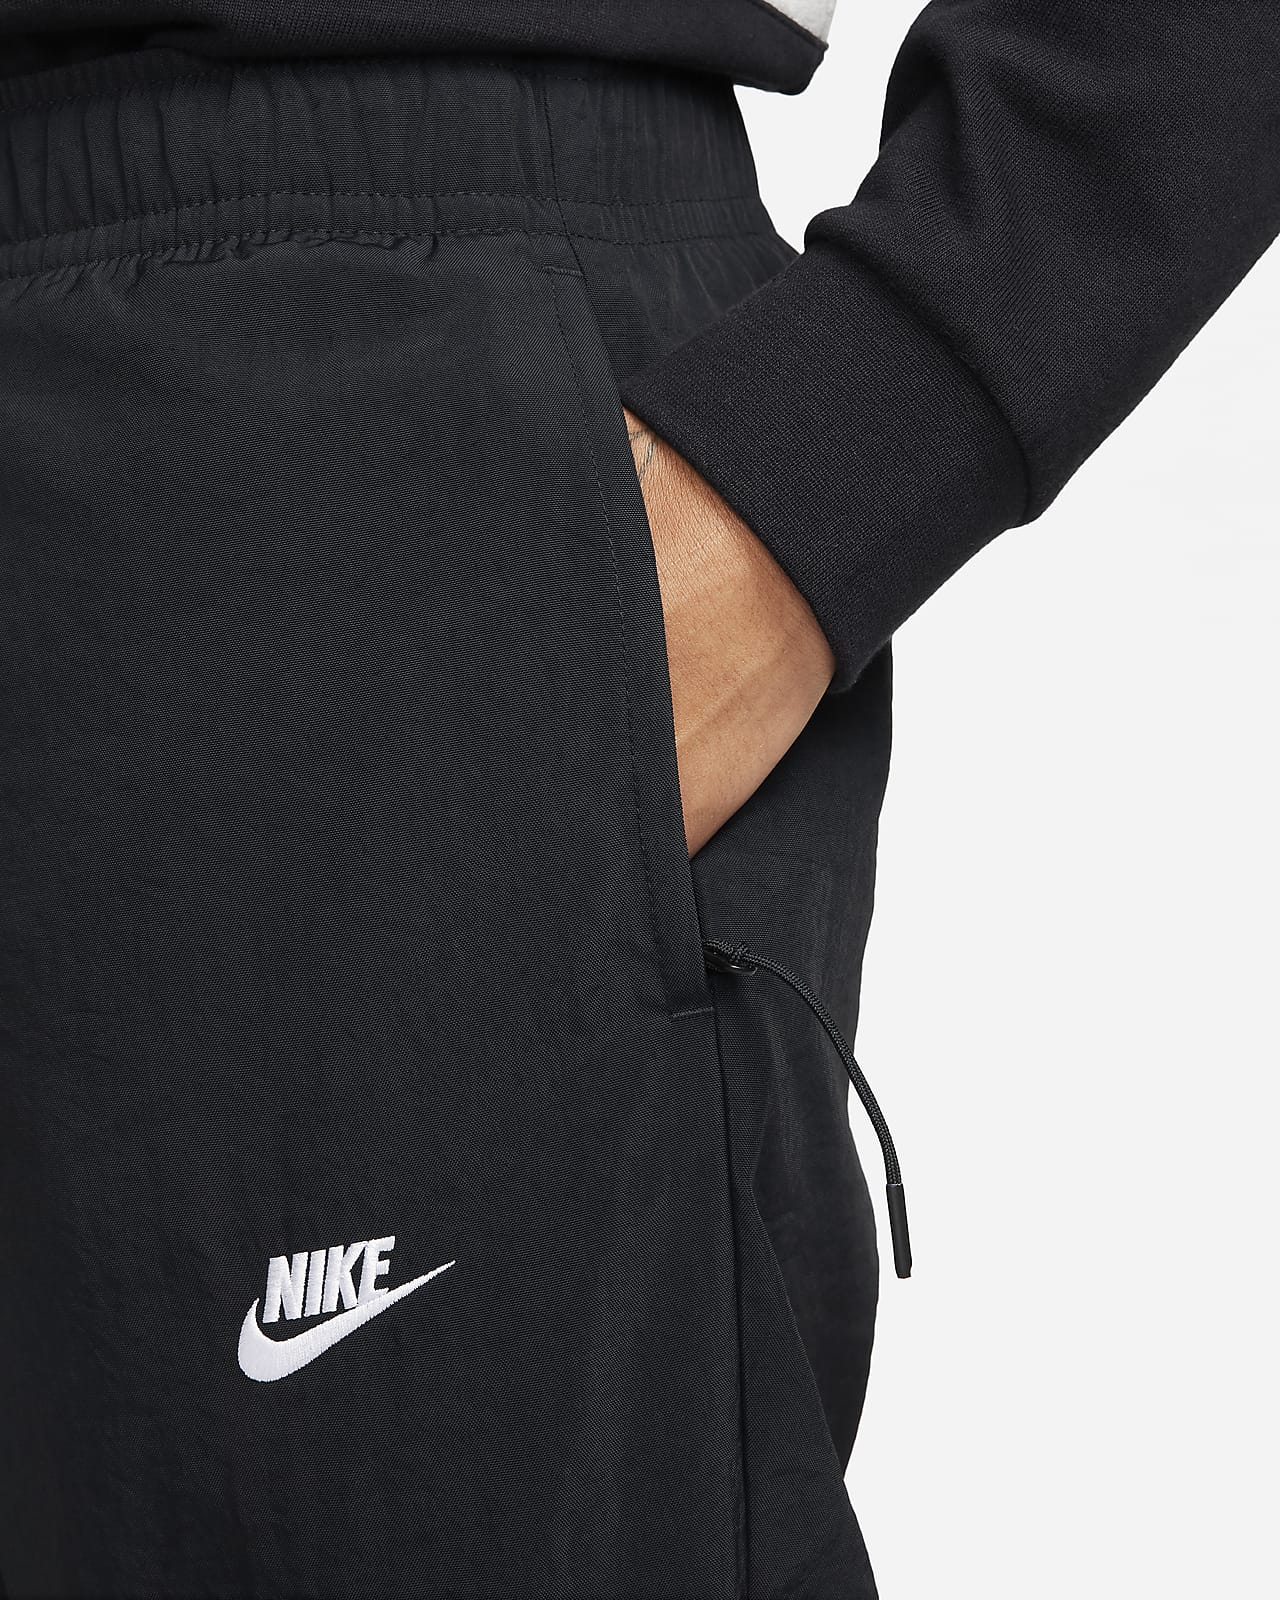 Nike Windrunner Men's Winterized Woven Trousers